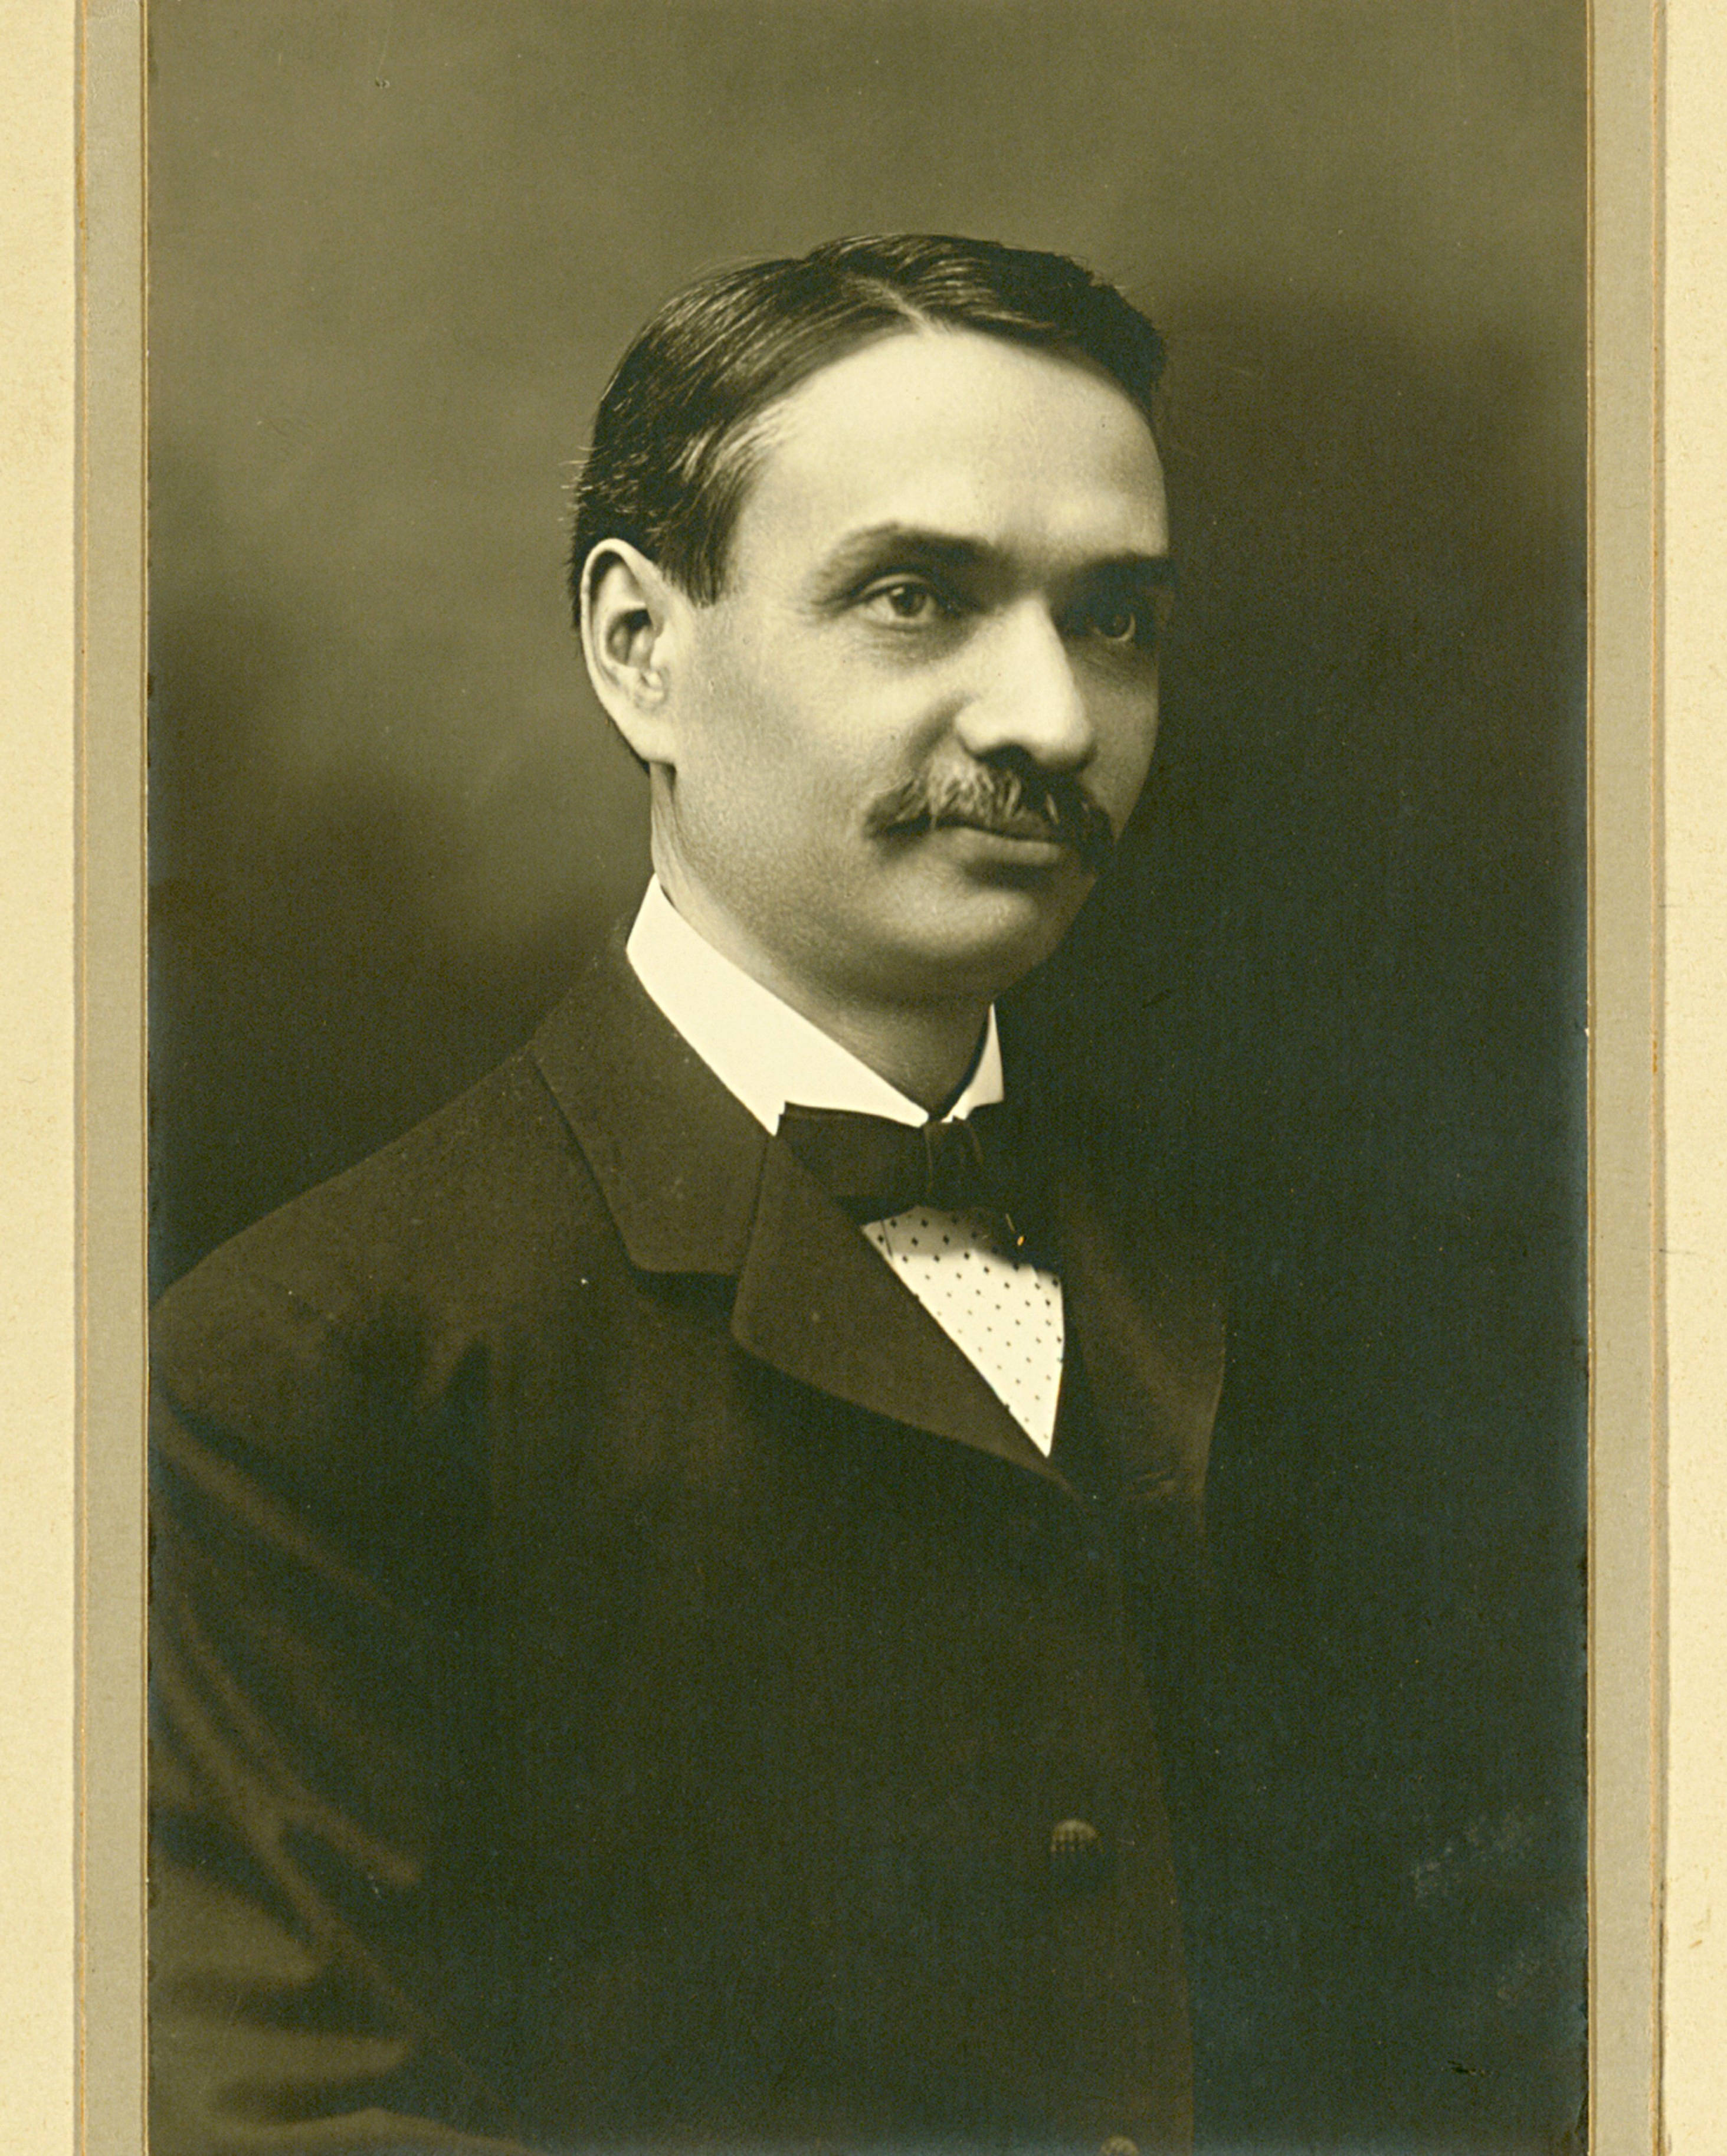 1917 portrait of William Volker.